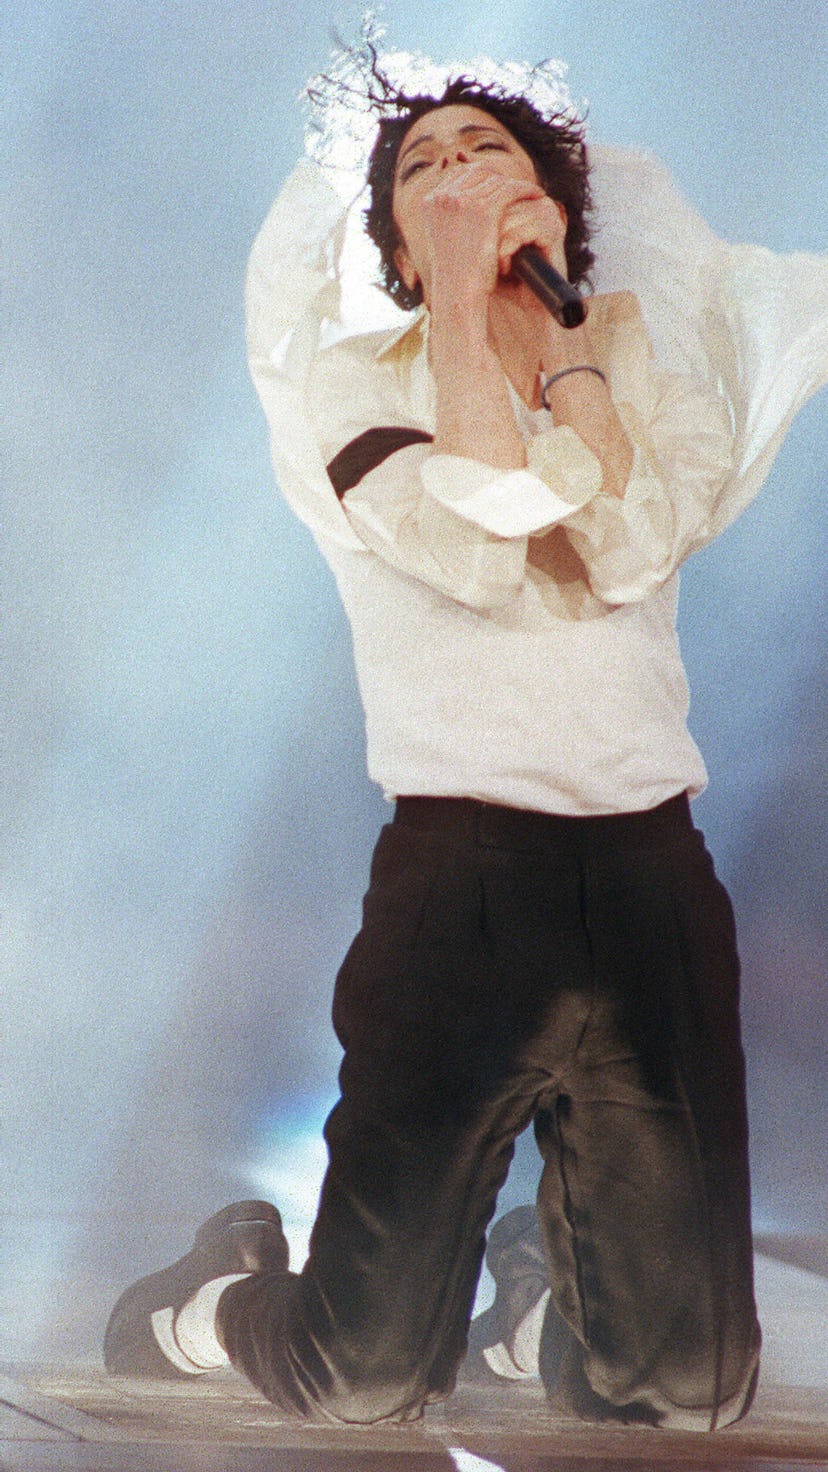 Michael Jackson bought out Guns N' Roses' Slash during his performance at the 1995 MTV VMAs. 